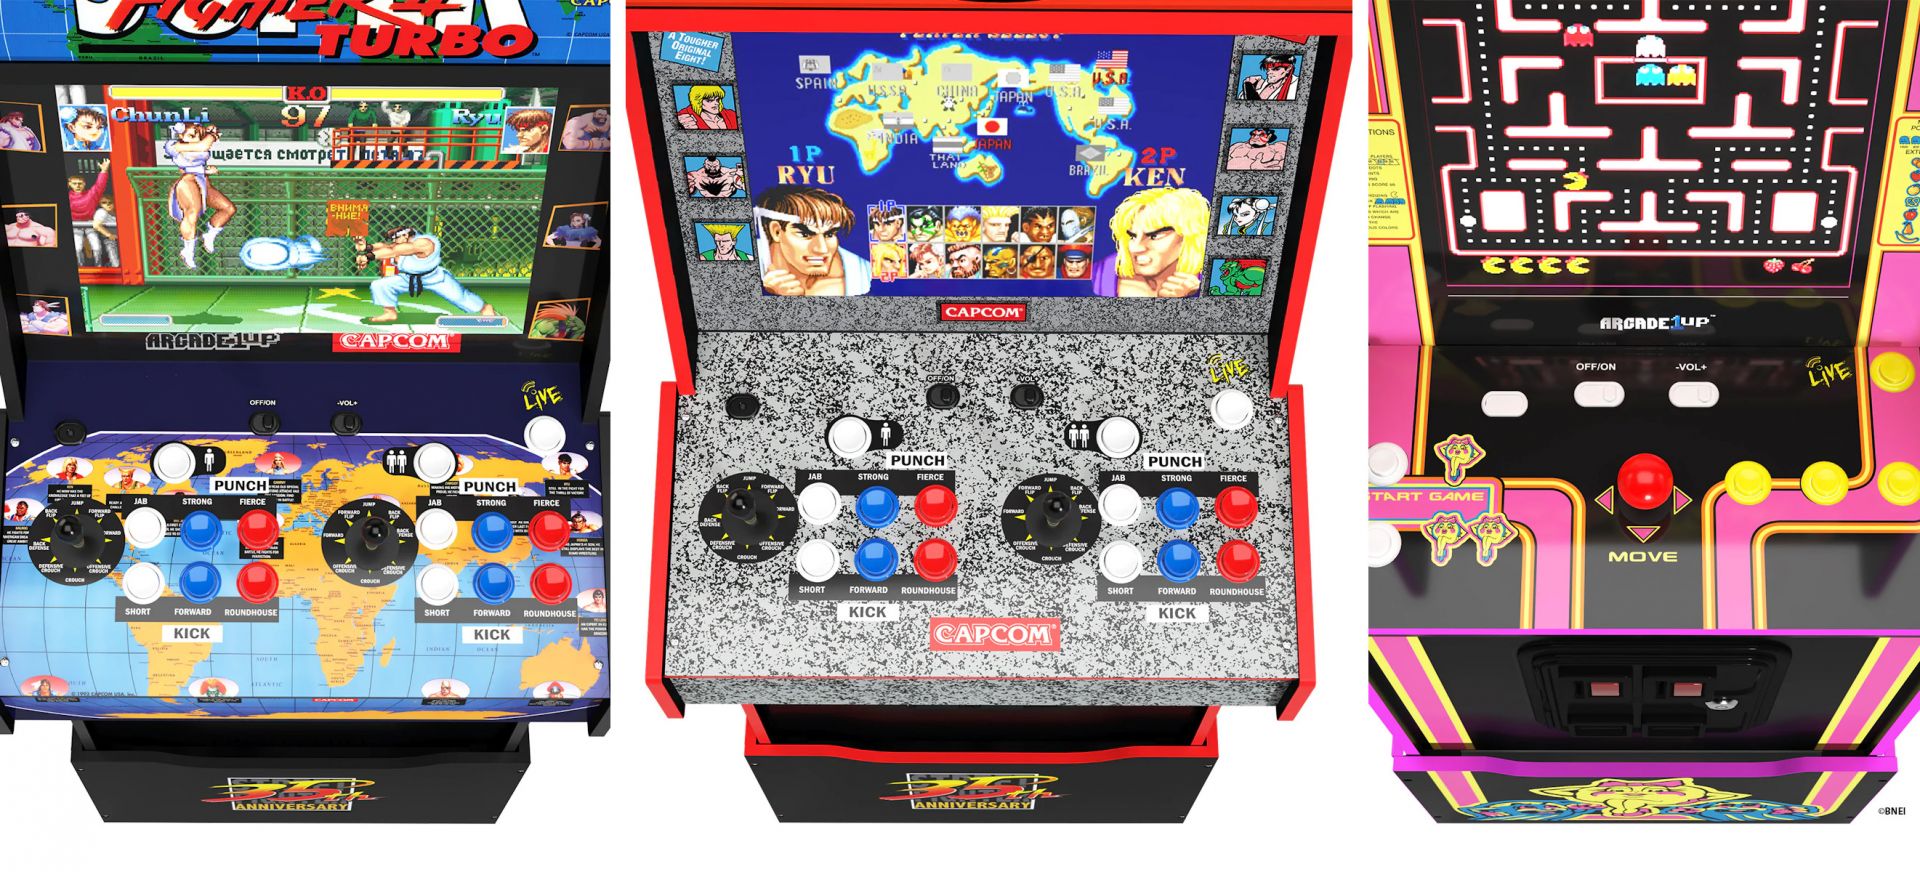 Capcom Legacy and Bandai Namco Legacy Arcade1Up cabinet control panels